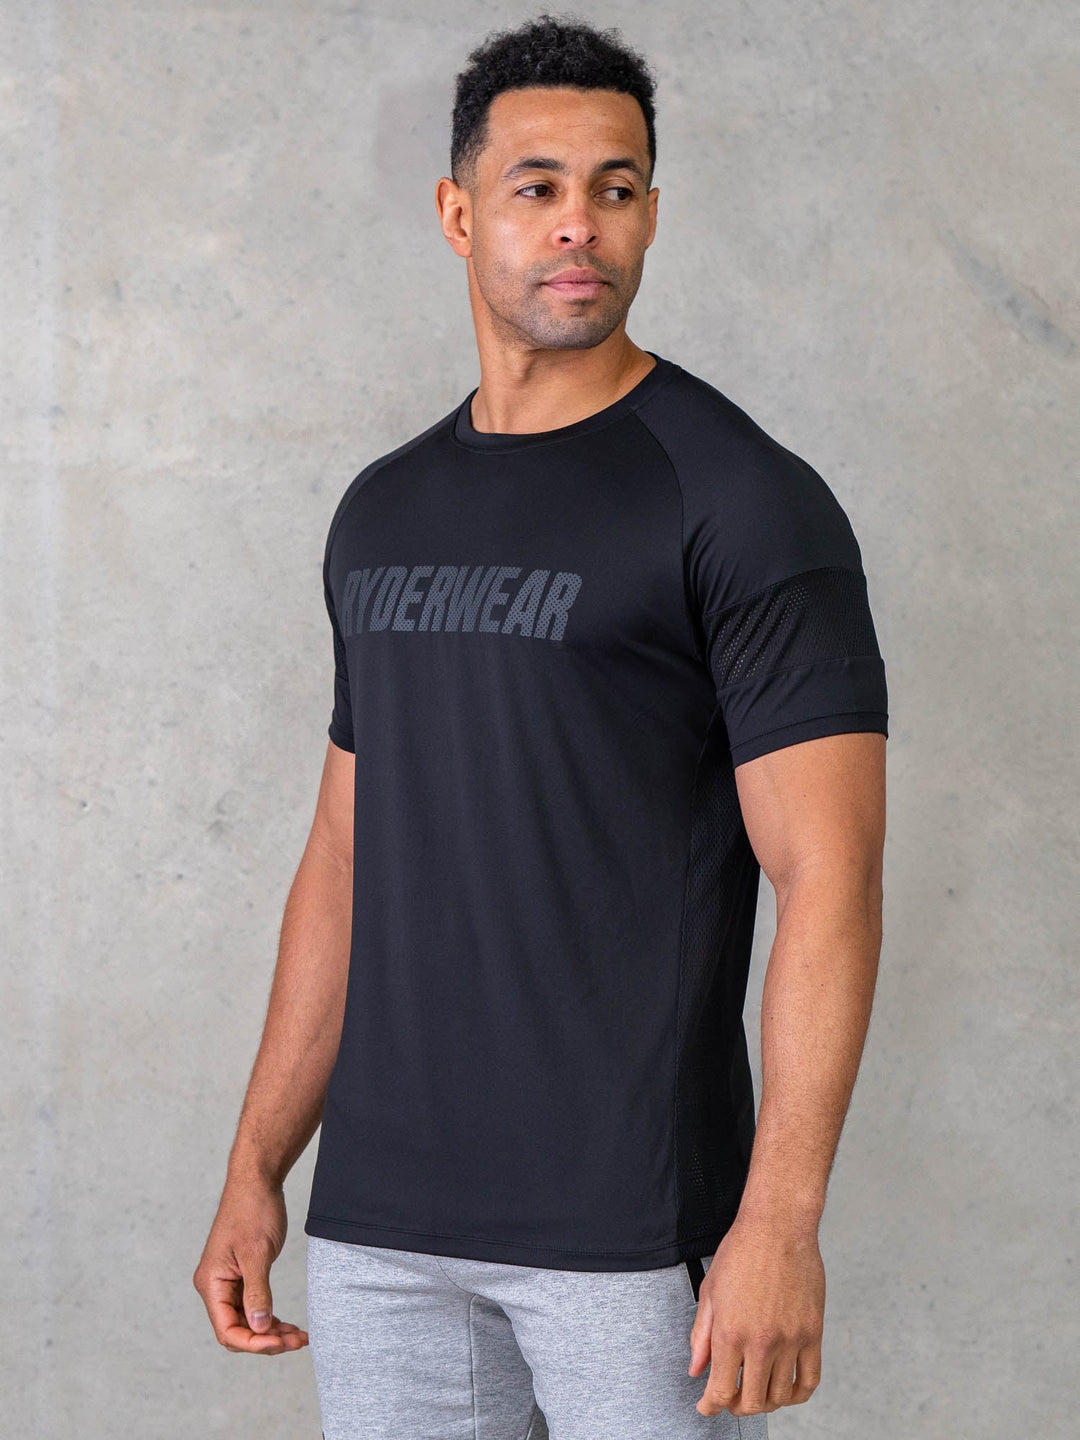 Flex Mesh T-Shirt - Black Clothing Ryderwear 